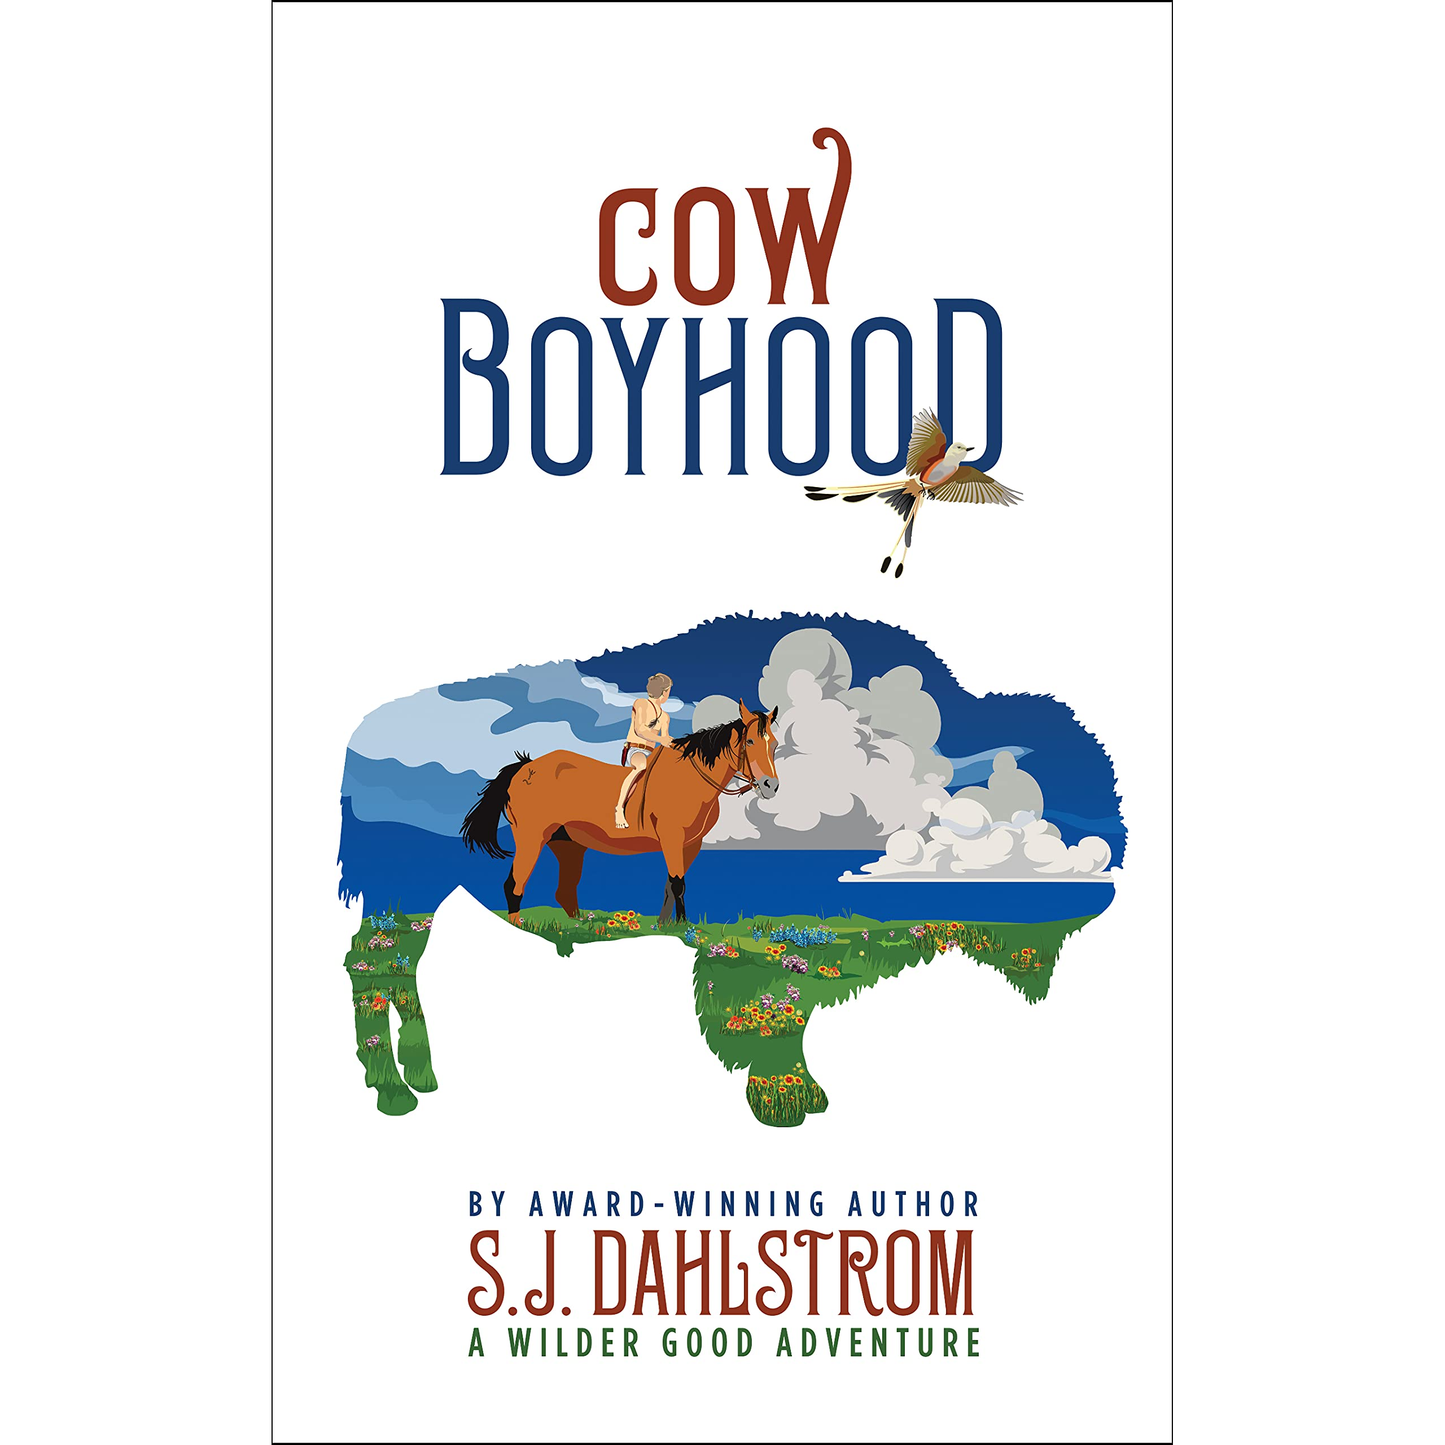 Cow Boyhood by S.J. Dahlstrom - WHA Winner 2022